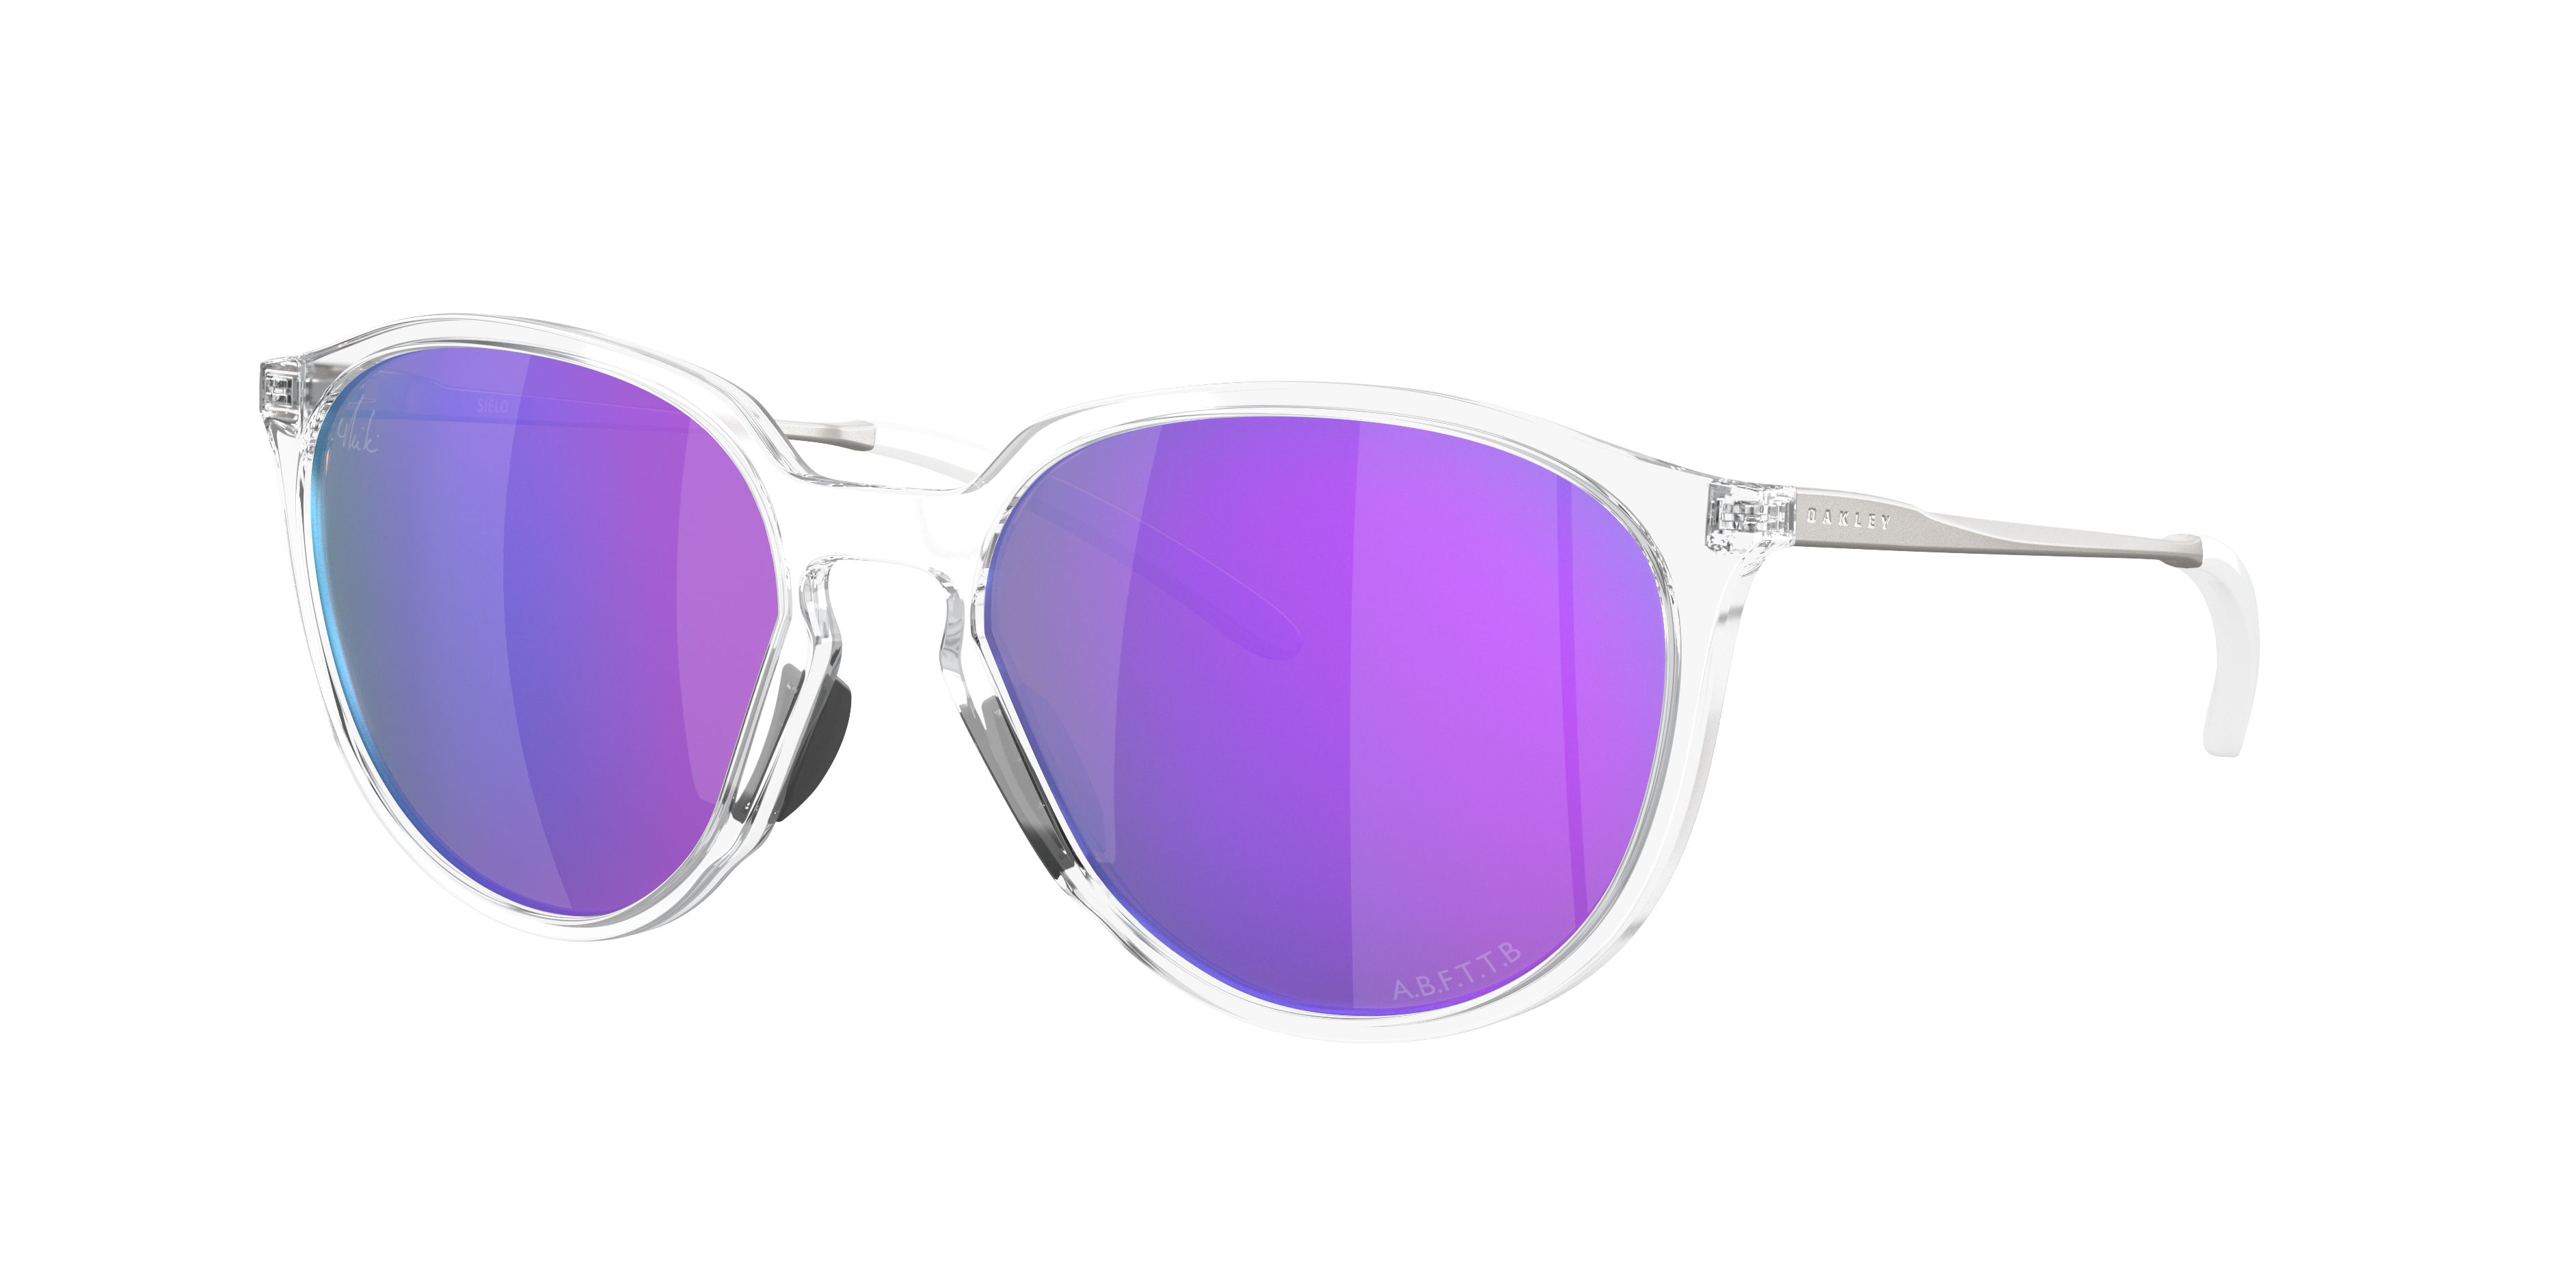 OAKLEY Unisex Sunglasses OO9288 Mikaela Shiffrin Signature Series Sielo –  Prescription Available, Frame: Cromo polido, Lens: Violeta Prizm